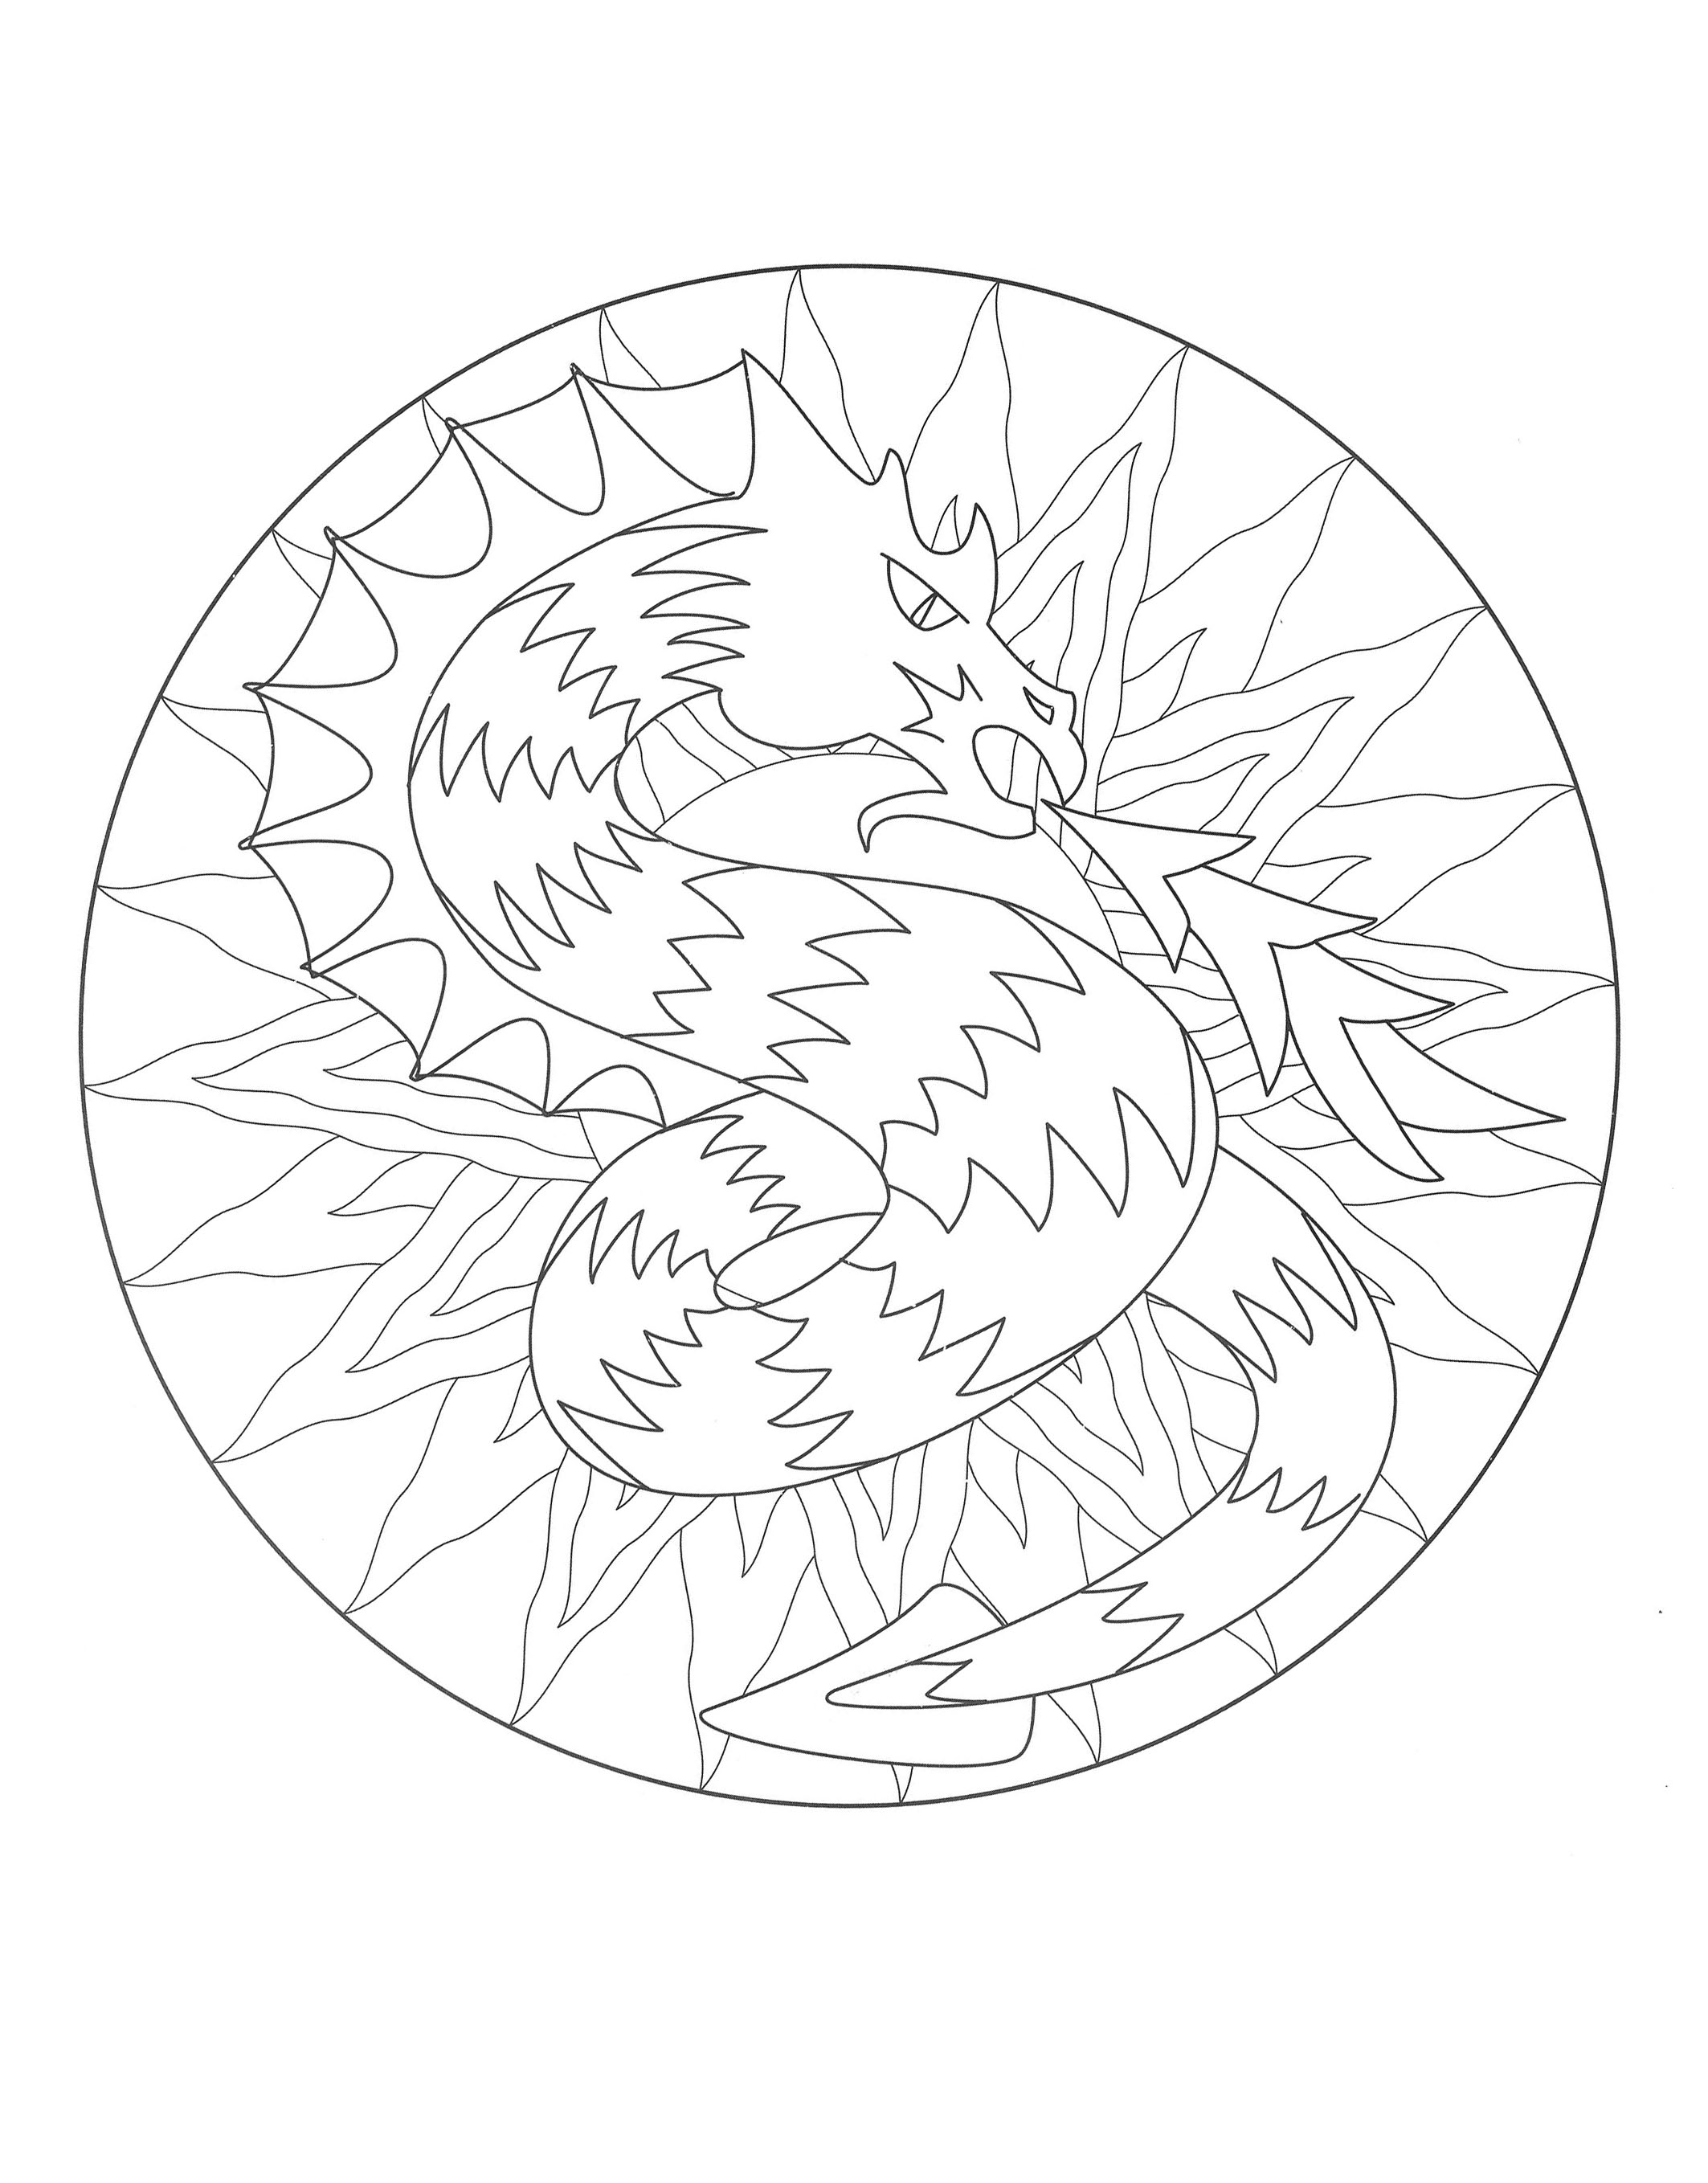 Mandala dragon - 3 - Mandalas Adult Coloring Pages